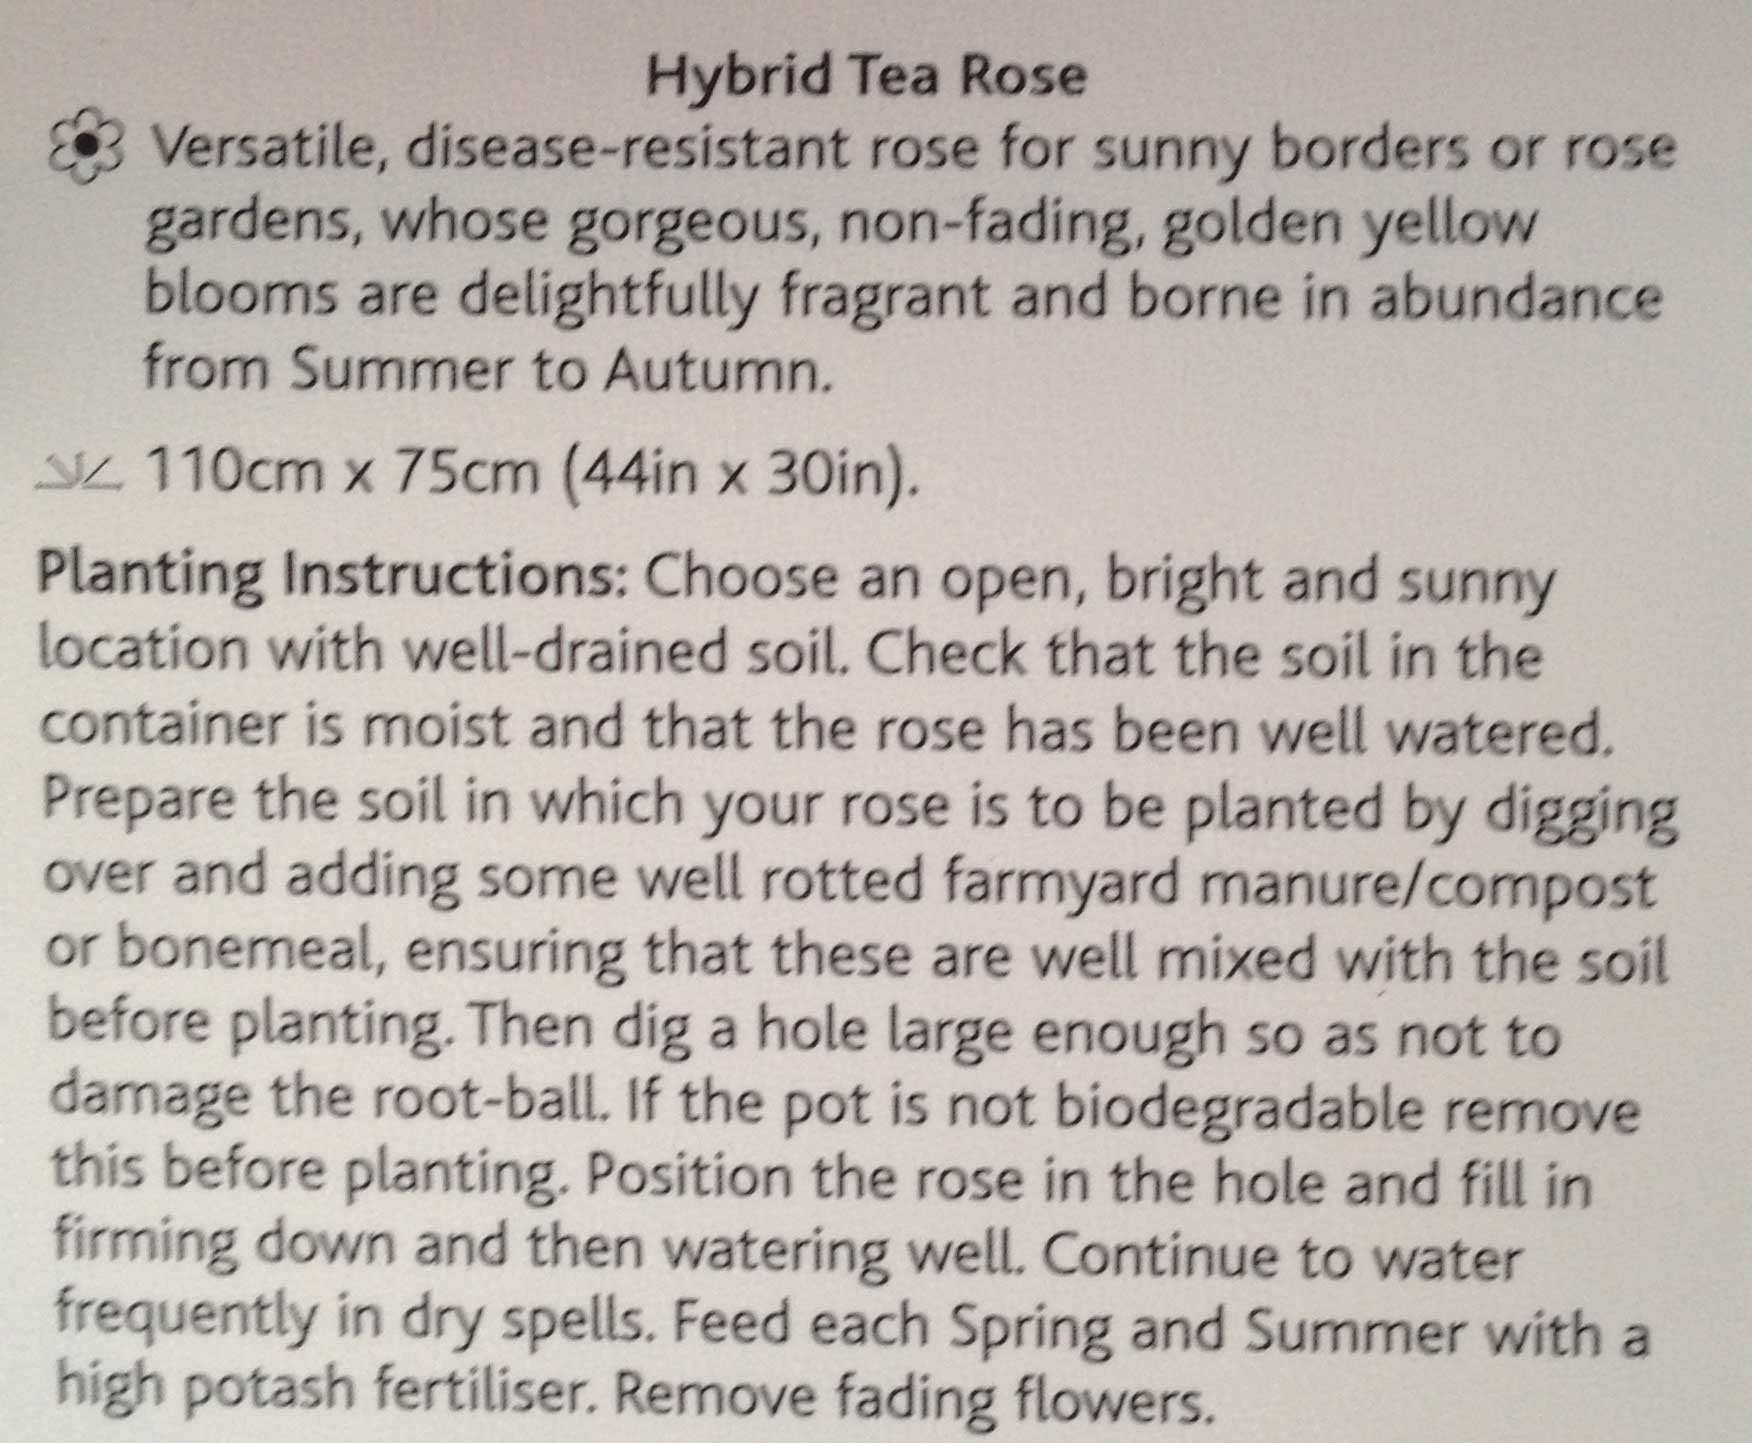 Keep Smiling 'fryfloridia' - Hybrid Tea Rose - Very Fragrant ...